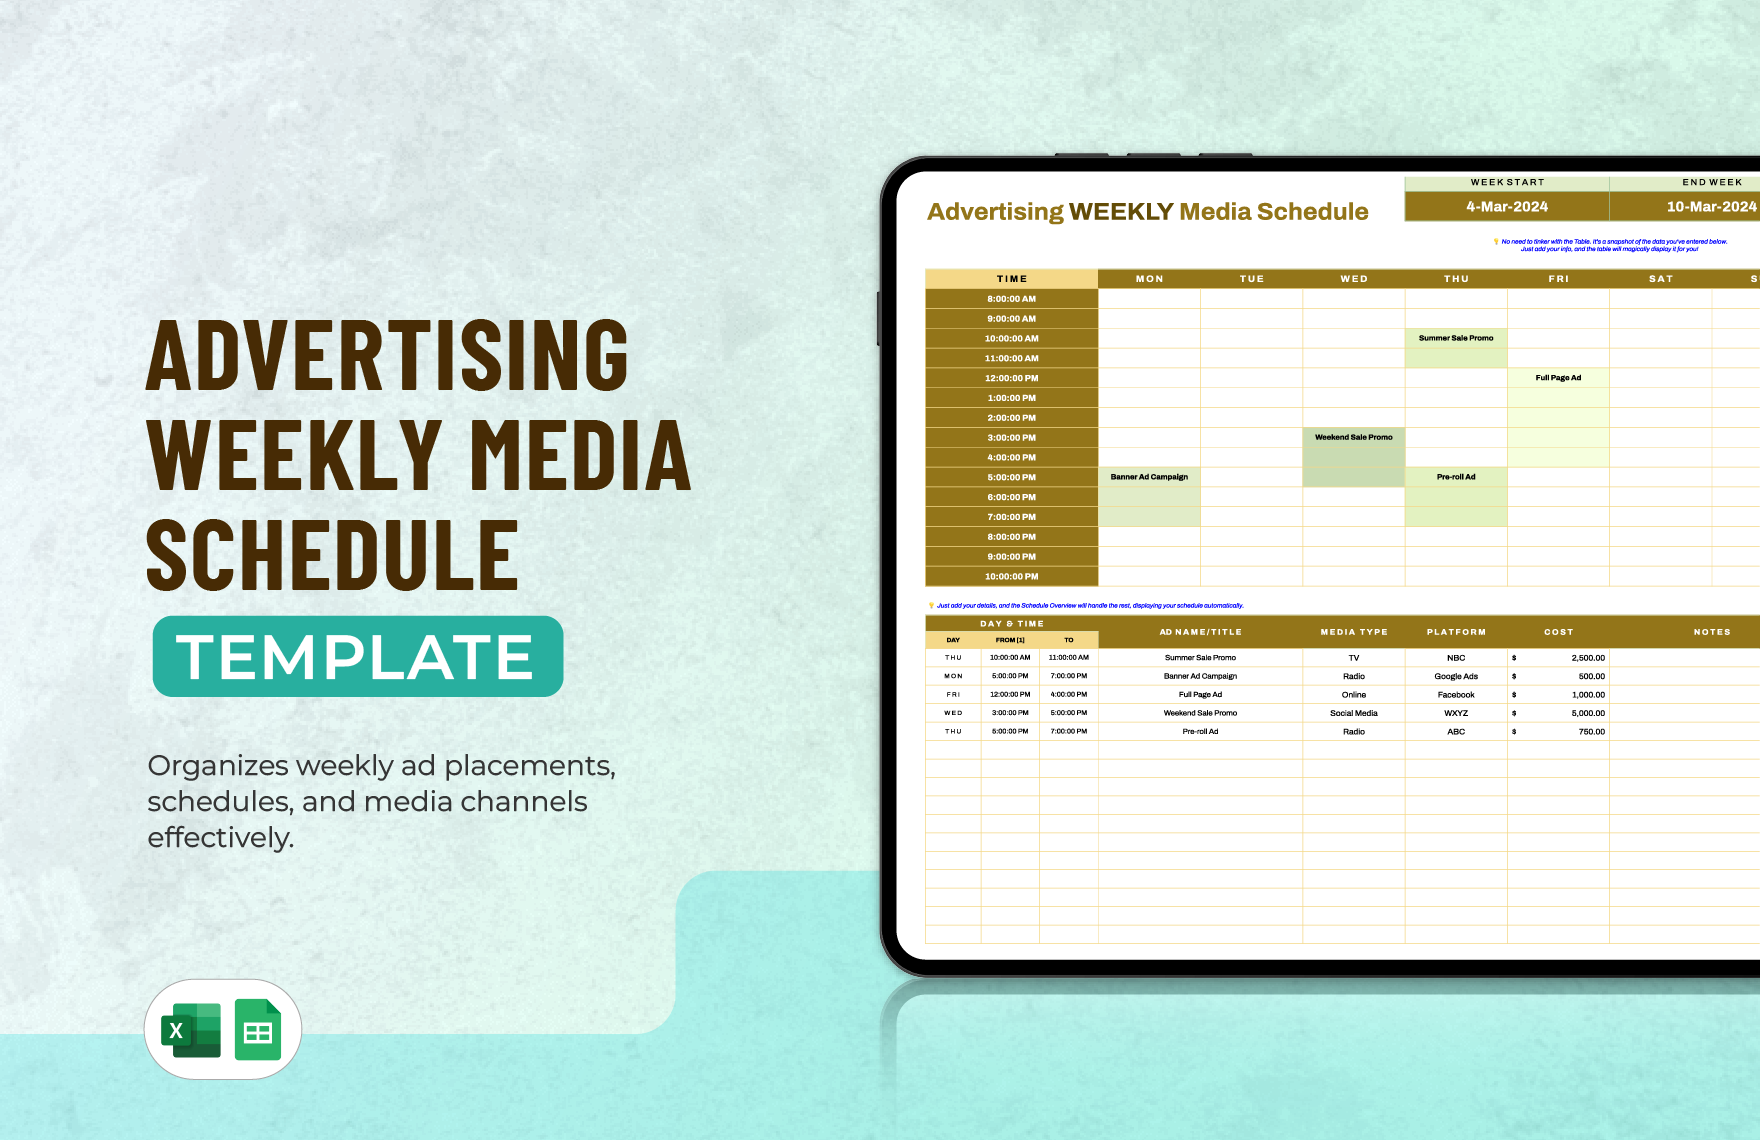 Advertising Weekly Media Schedule Template in Excel, Google Sheets